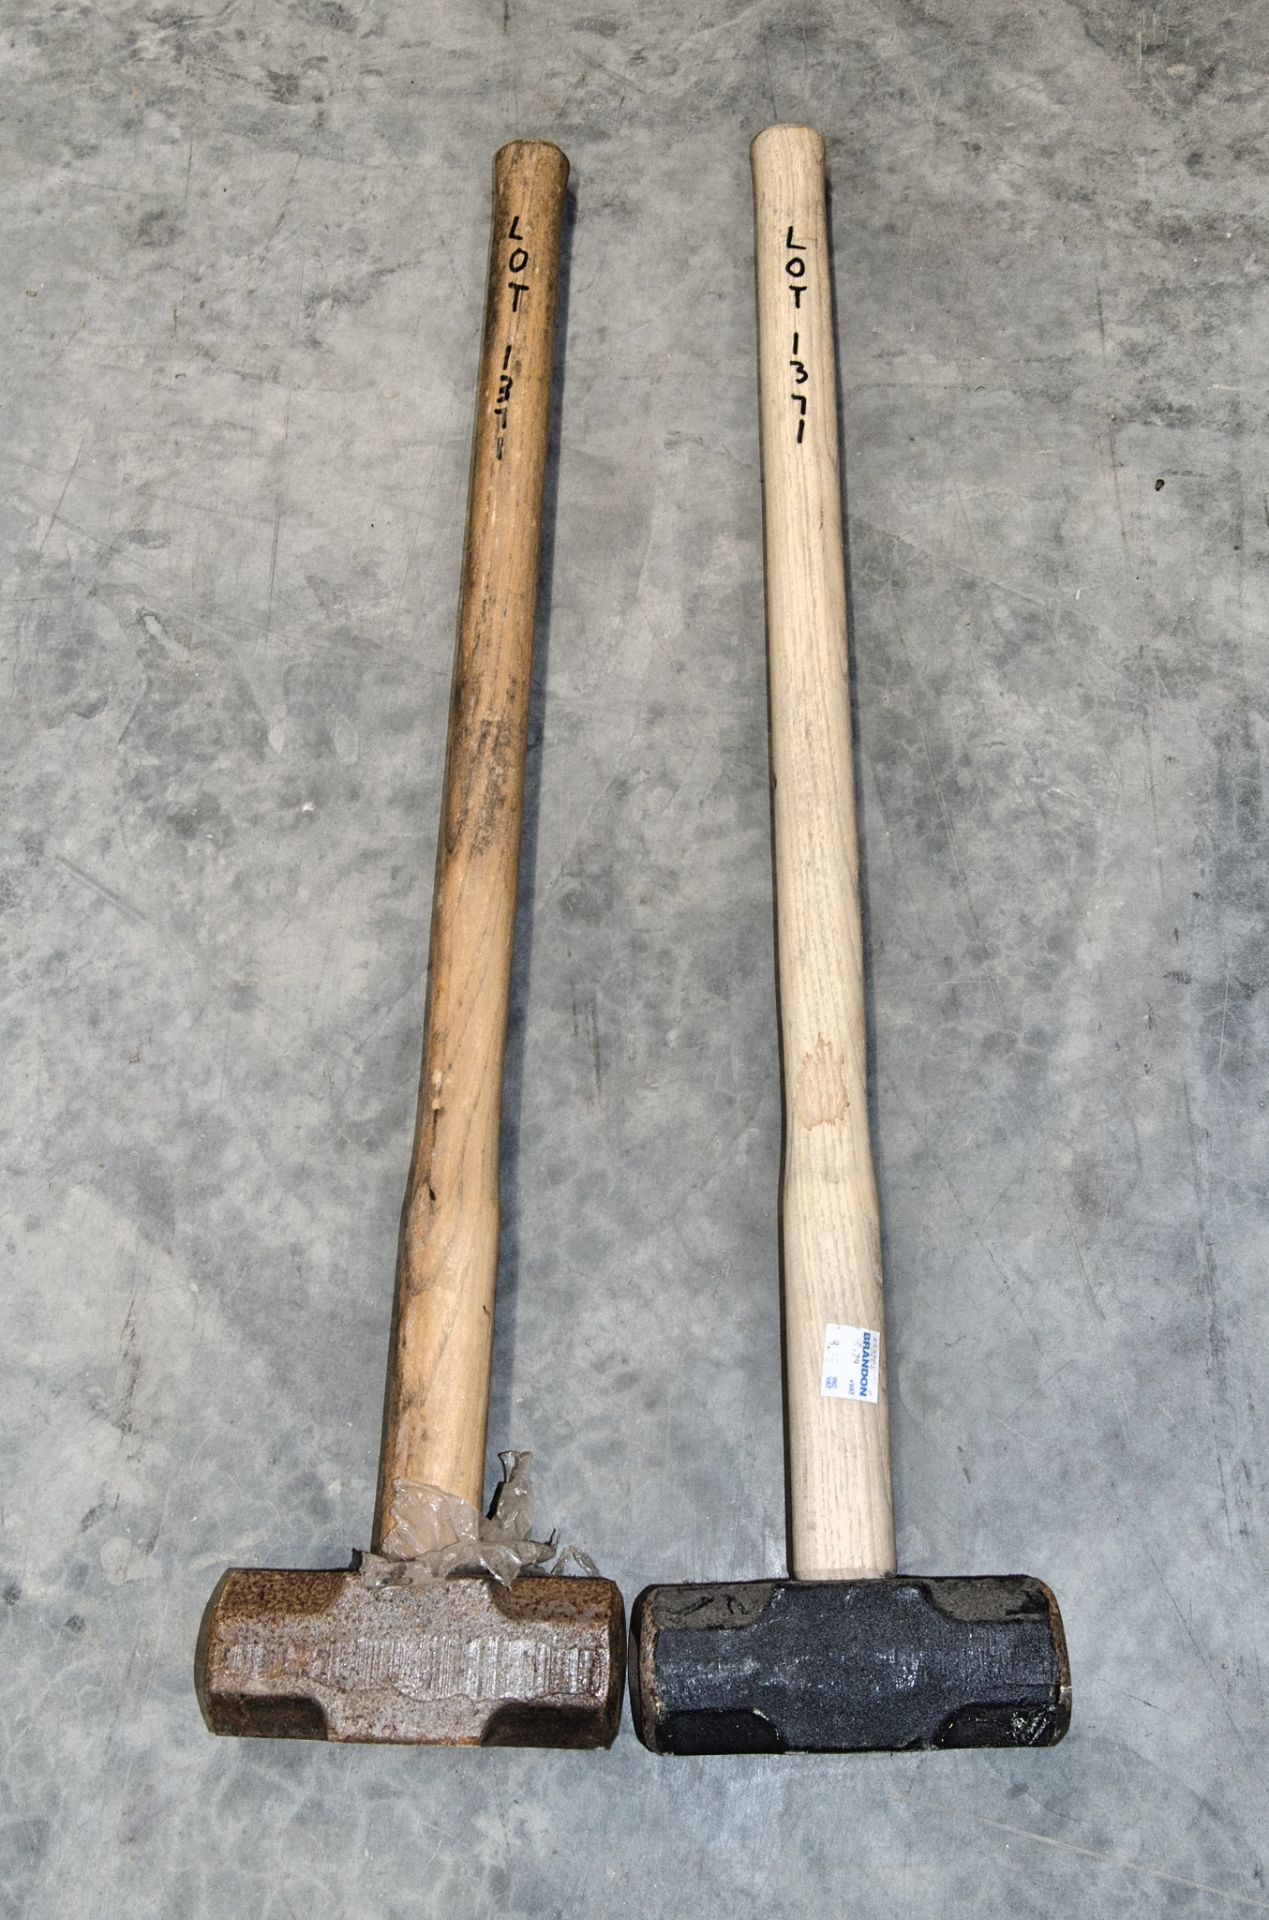 2 - 10lb sledgehammers